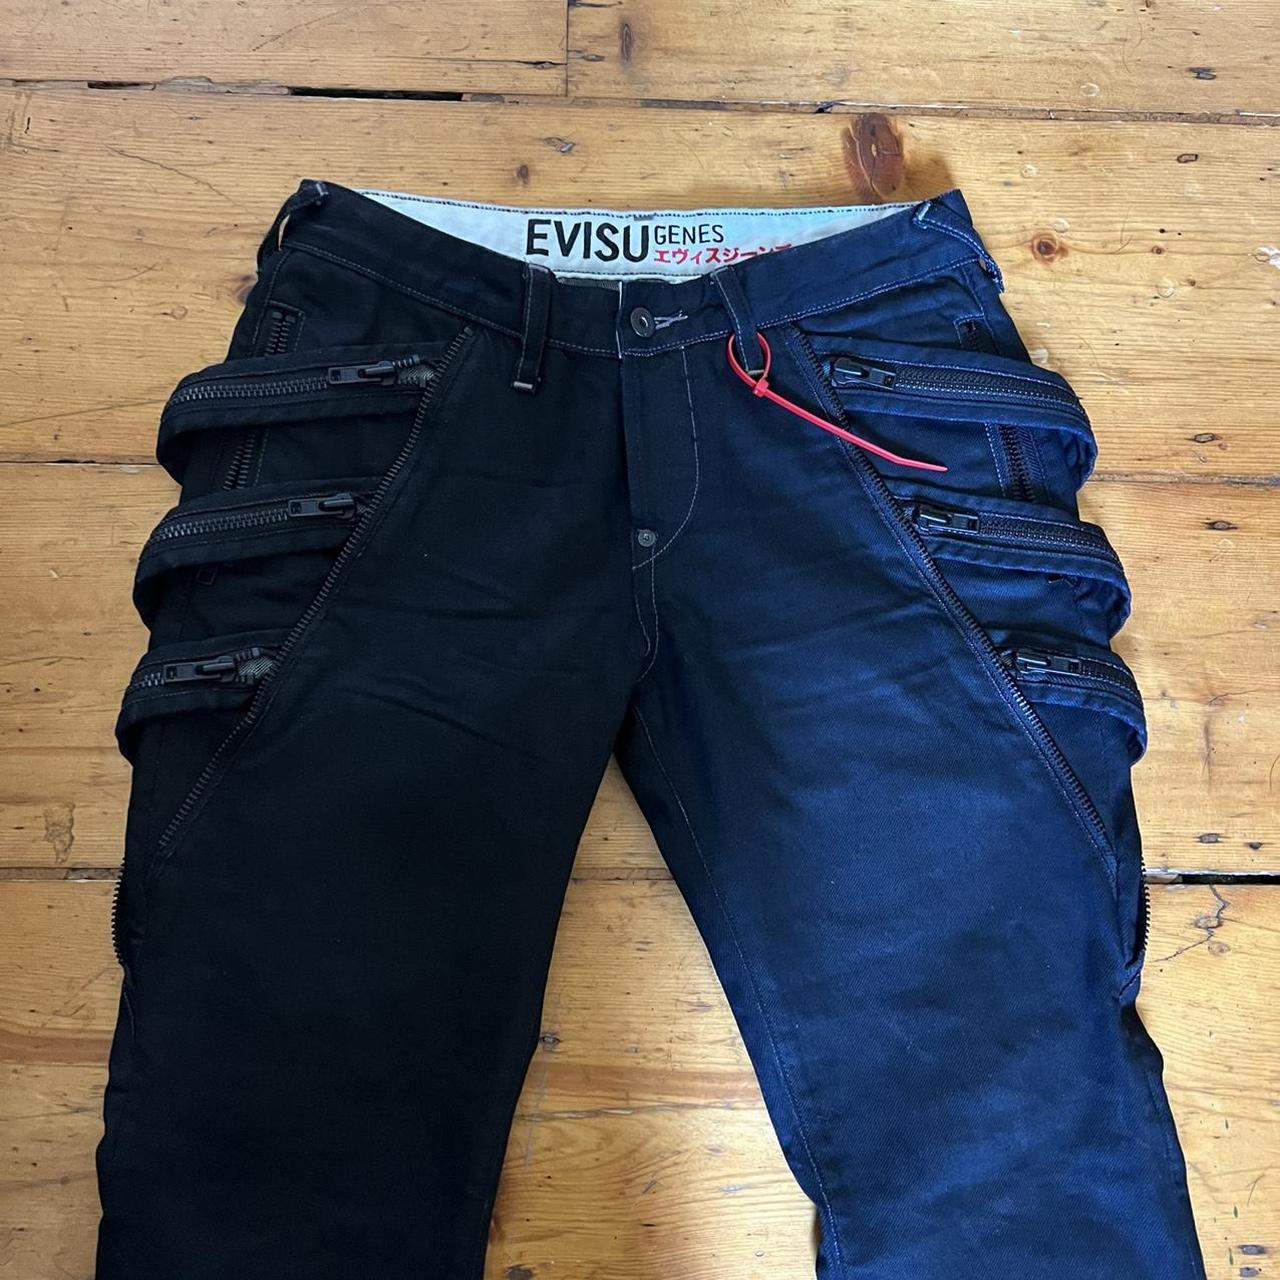 Evisu genes black skinny jeans The sickest evisu... - Depop